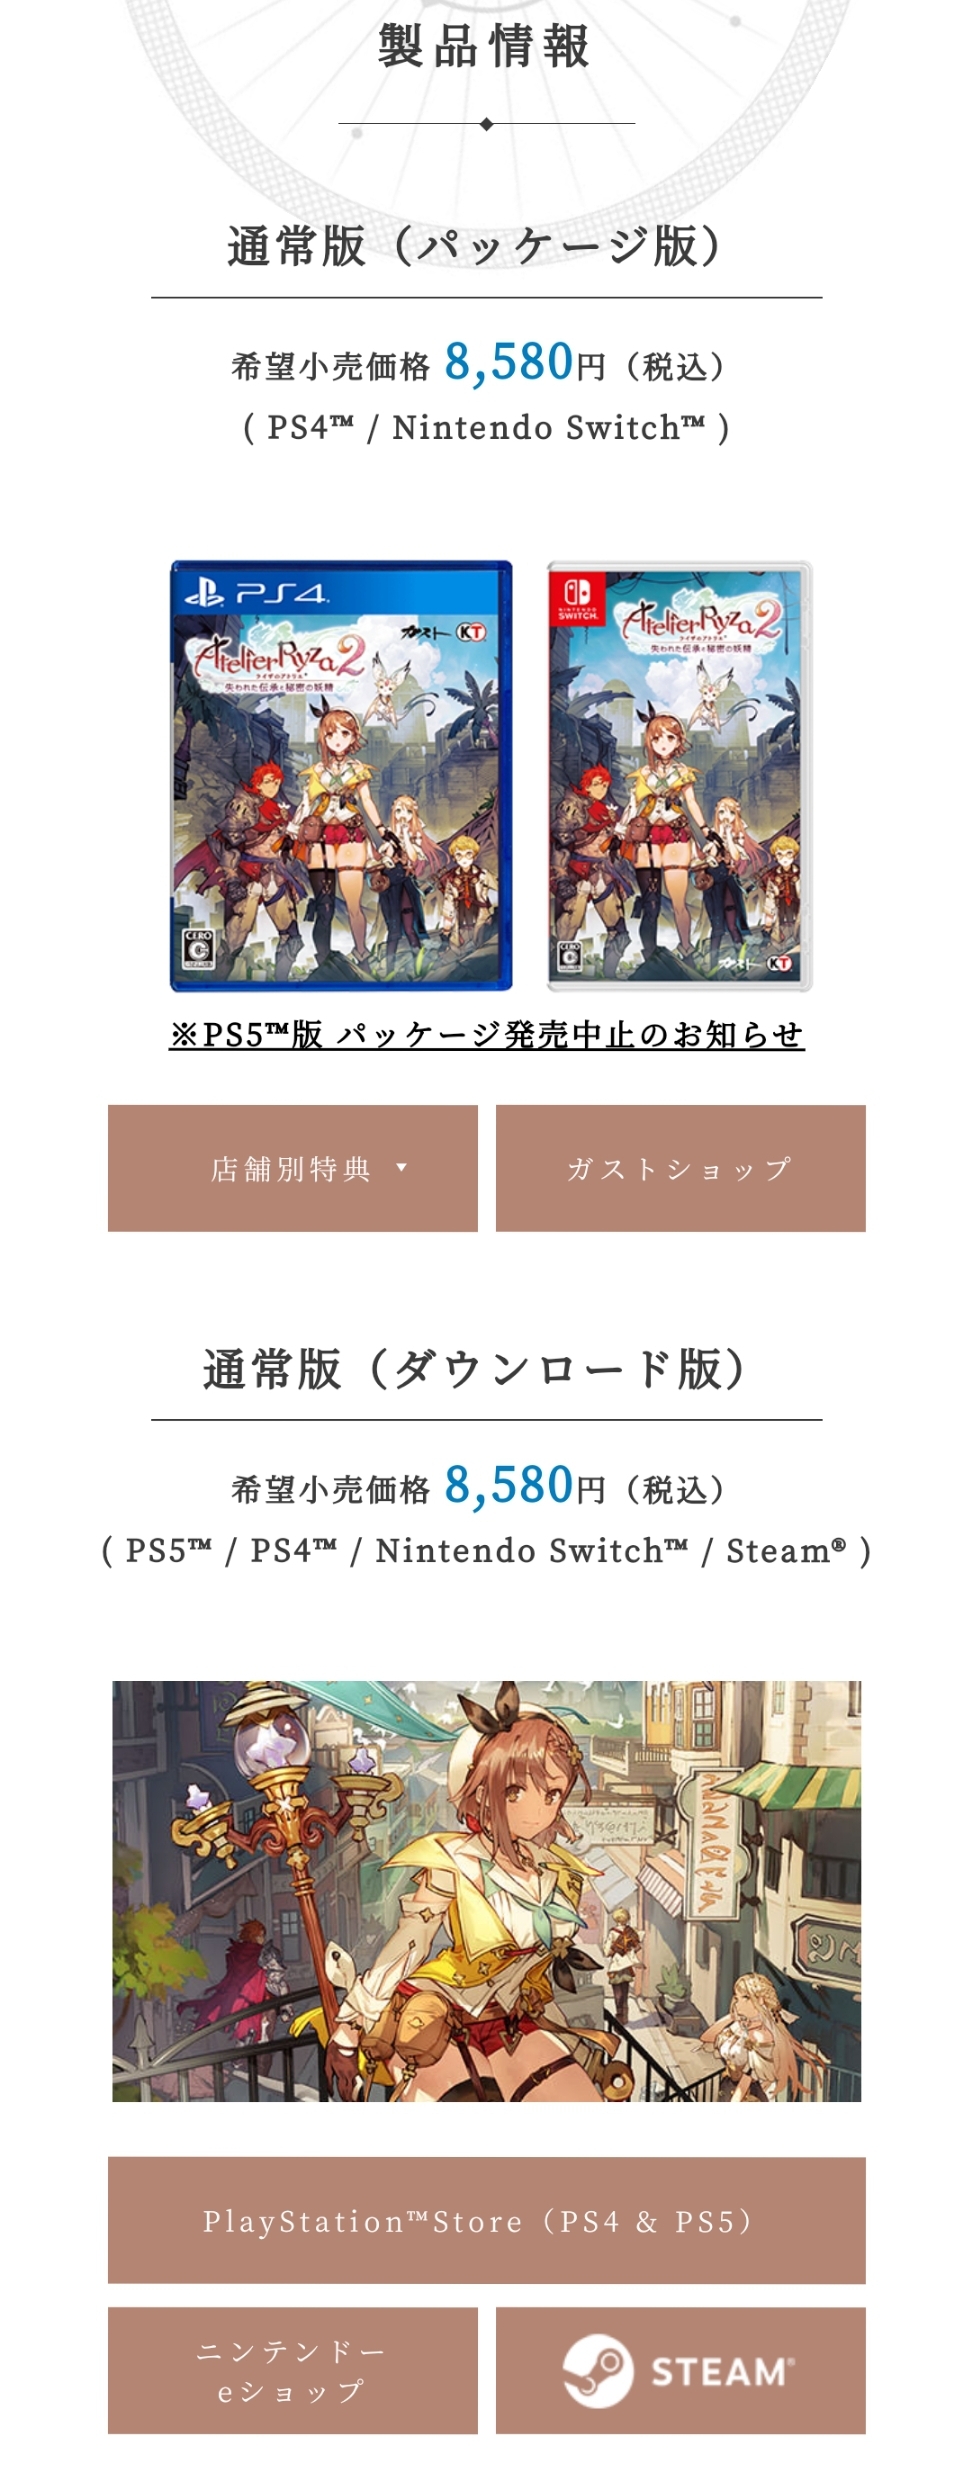 6aYSABd 【ゲーム】PS5の買取価格、9万7千円まで高騰するｗ ｗ ｗ ｗ